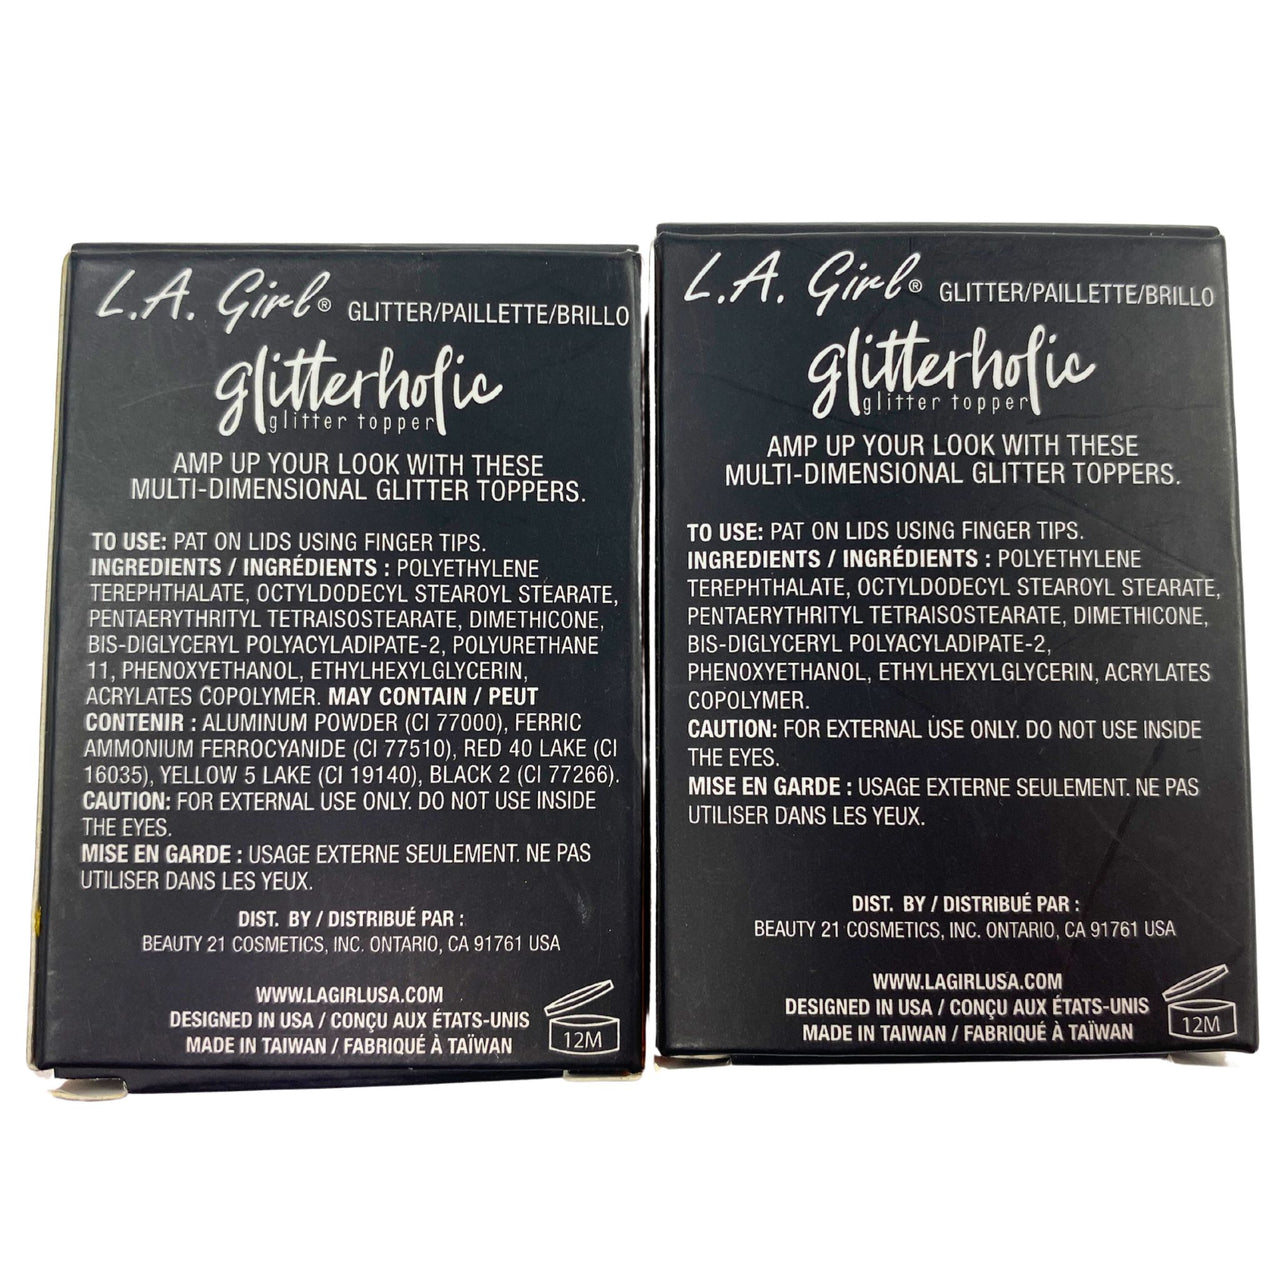 L.A.Girl Glitterholic Glitter Topper Holo-Glam & Electrify